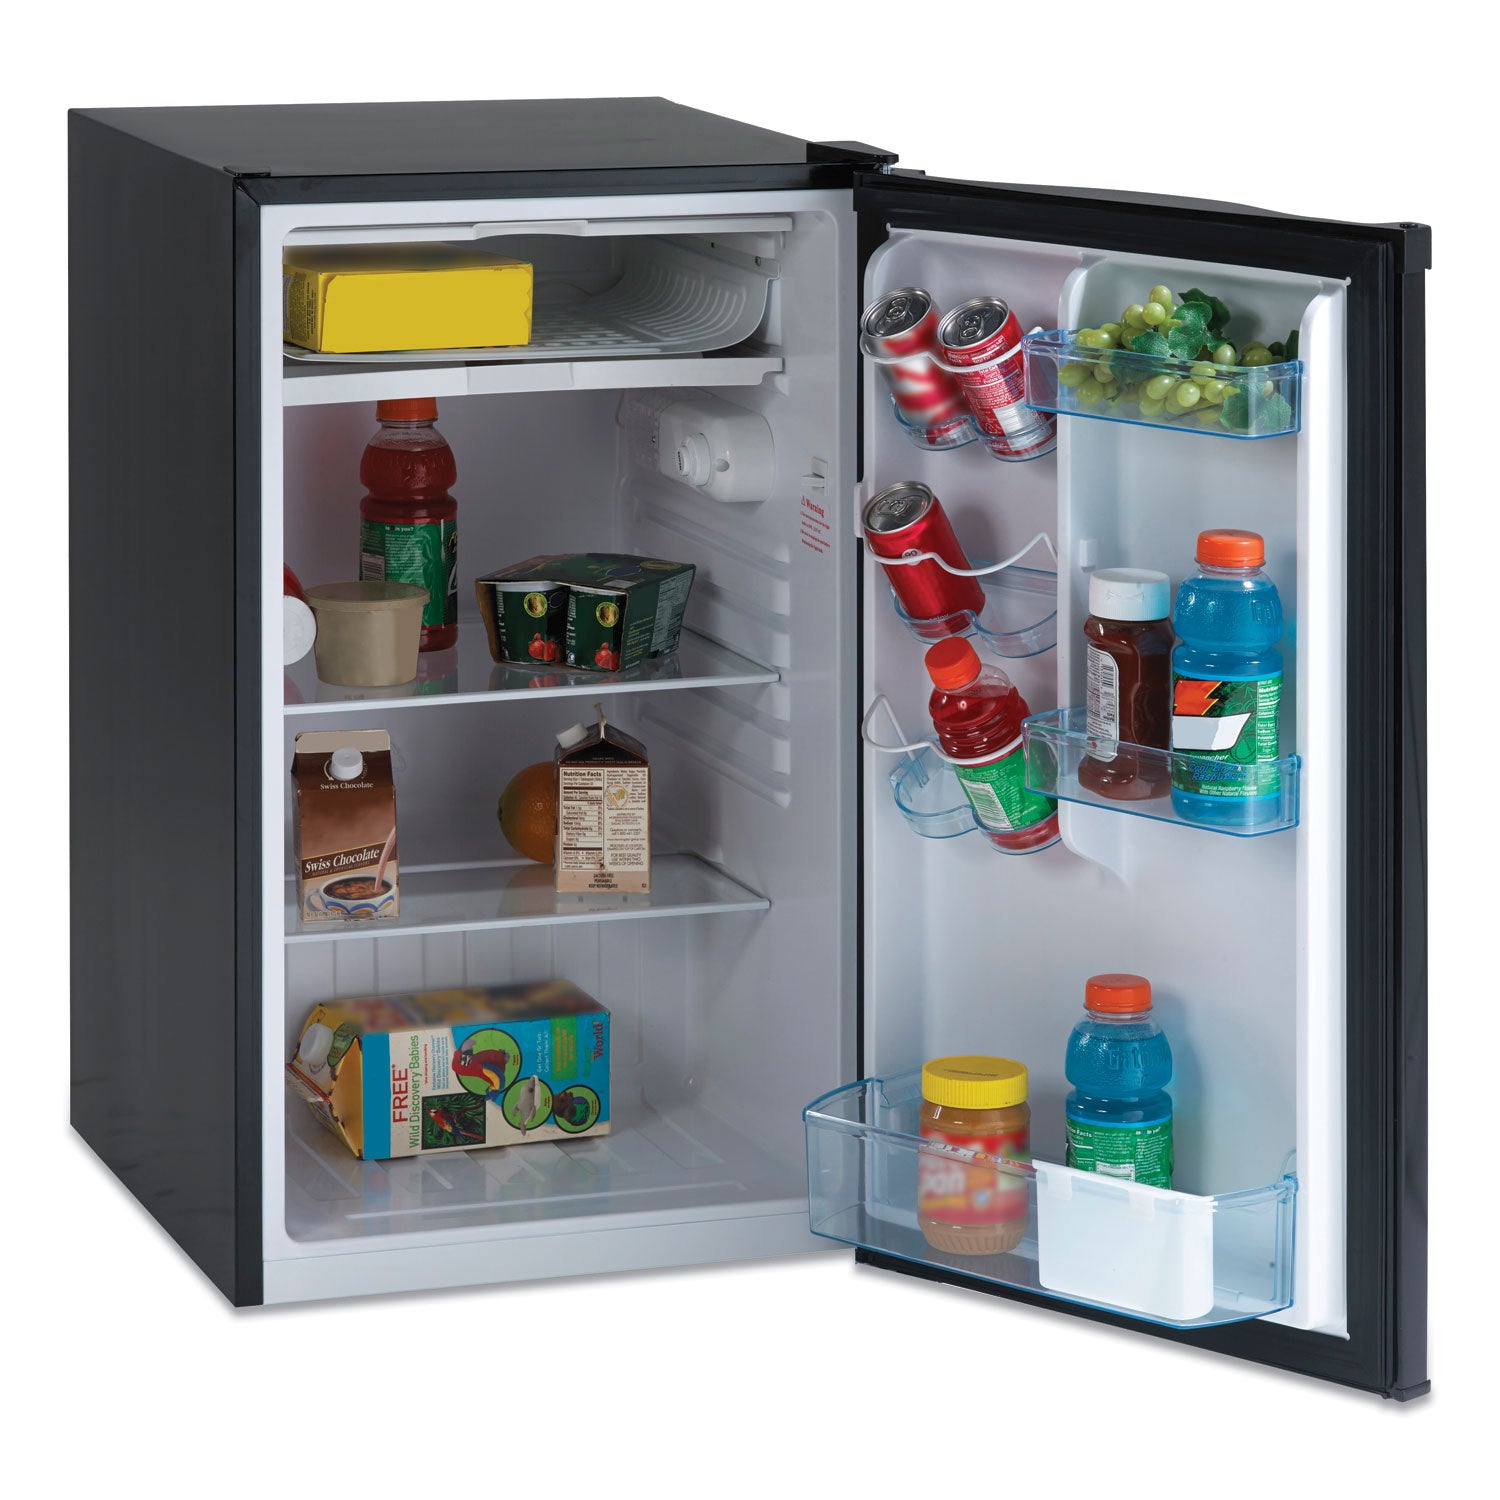 4.4 Cu. Ft. Counter Height Refrigerator, Black - 